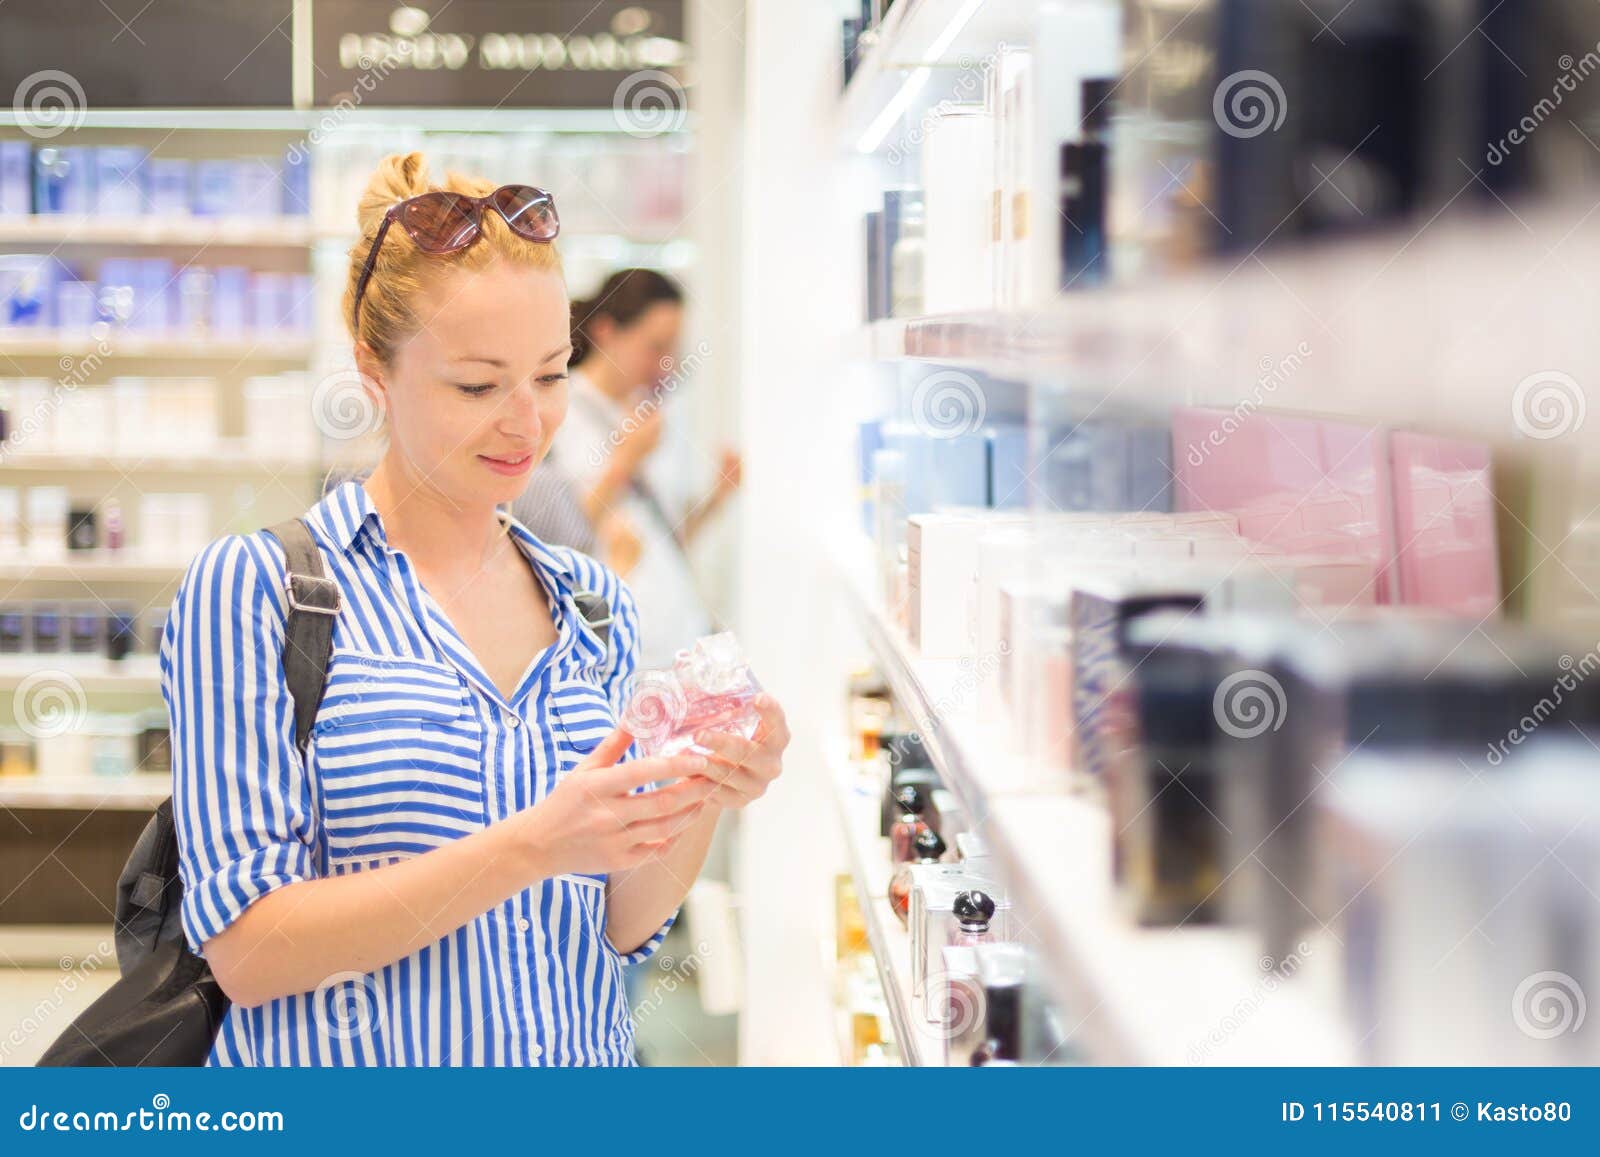 elegant blond young woman choosing perfume in retail store.